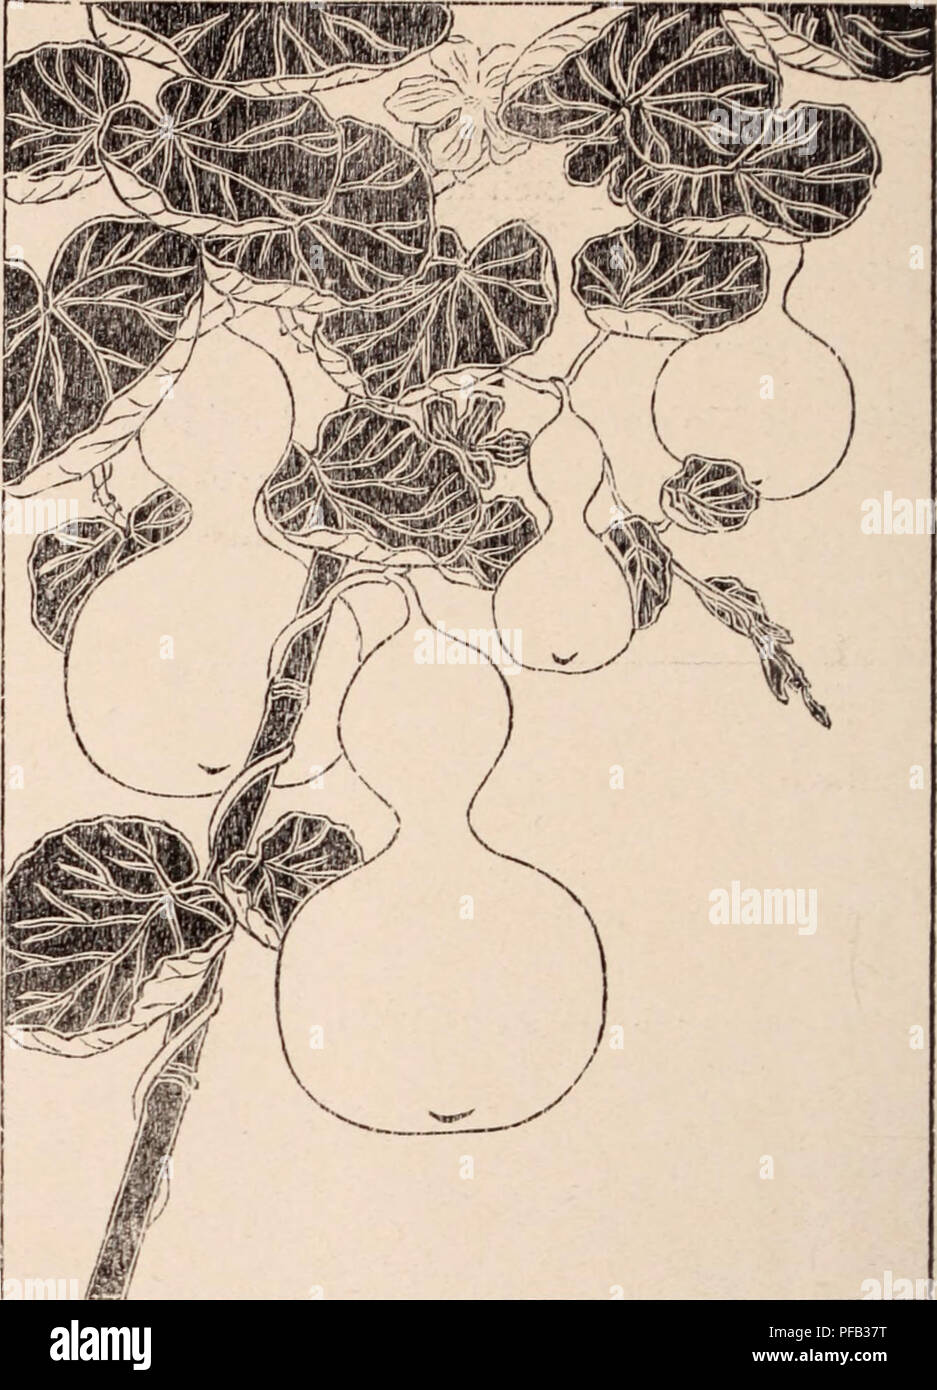 . Descriptive catalogue of flowering, ornamental trees, shrubs, bulbs, herbs, climbers, fruit trees, &amp;c., &amp;c., &amp;c. / for sale by the Yokohama Nursery Co., Limited.. Nursery Catalogue. CATALOGUE OF THE YOKOHAJVIA NUKSEllY Co., Ltd. (1912). Clematis florida, fine white doubleâper 10, $1.50. Clematis florida, fine double violetâper 10, $1.50. Dioscorea Batatas. (Ciiuuimou vine)â per 10, 50e. Dioscorea Sativa, (Ciunumon vine;âper 10. 50c. Dioscorea teiniipes, smaller speciesâper 10. 50c. Doliclios Lablab, &quot; Dayli^bl,&quot; hardy annual climbing vine, tall quick easy growiiig ; its Stock Photo